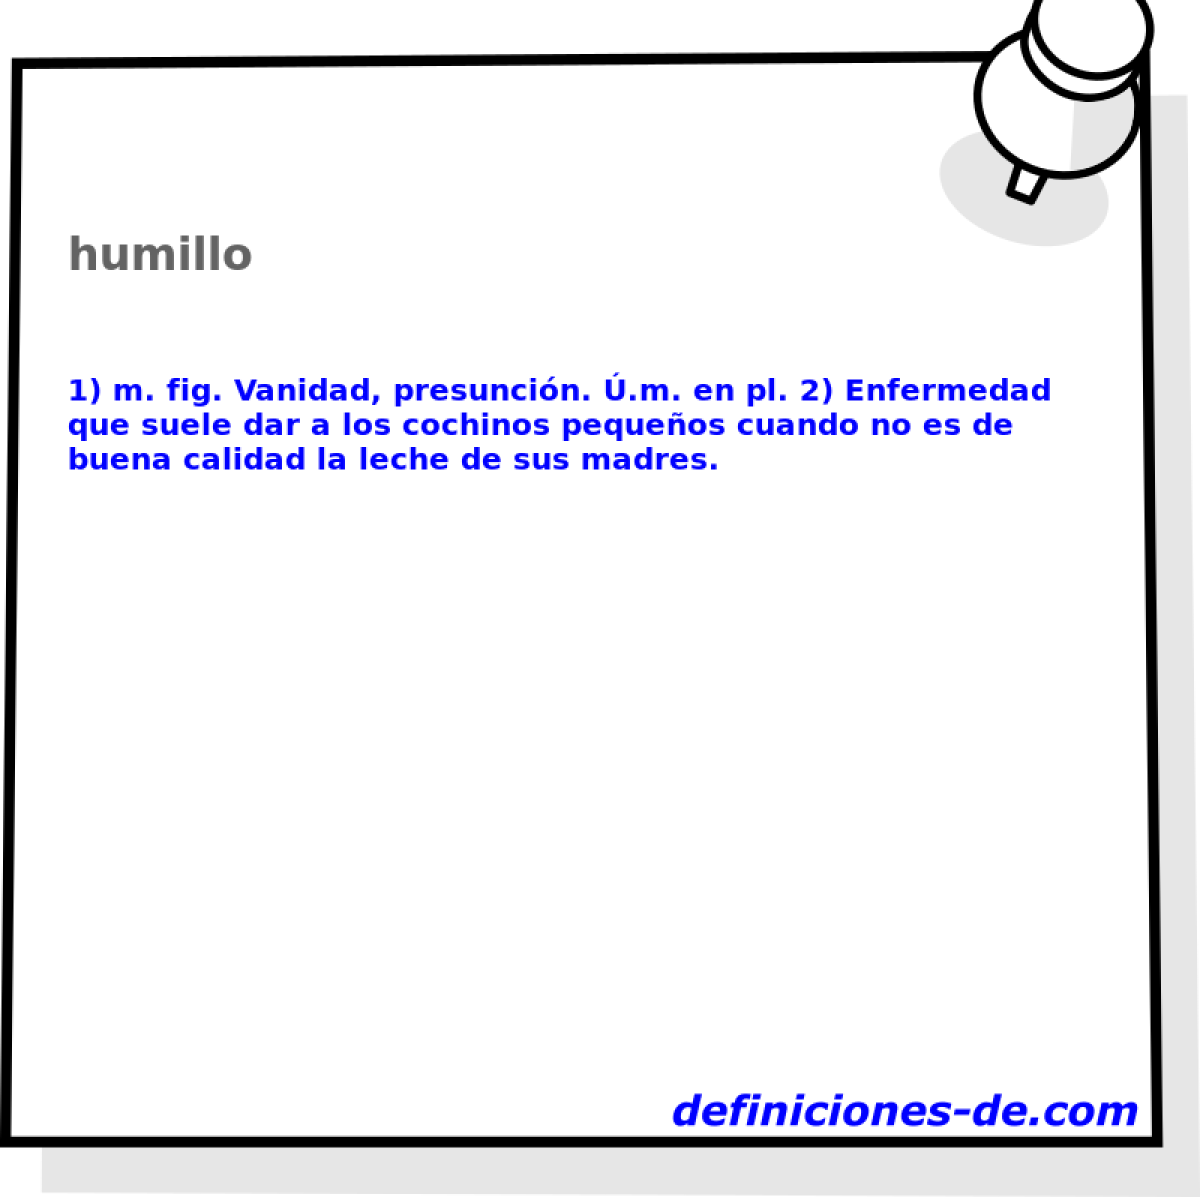 humillo 